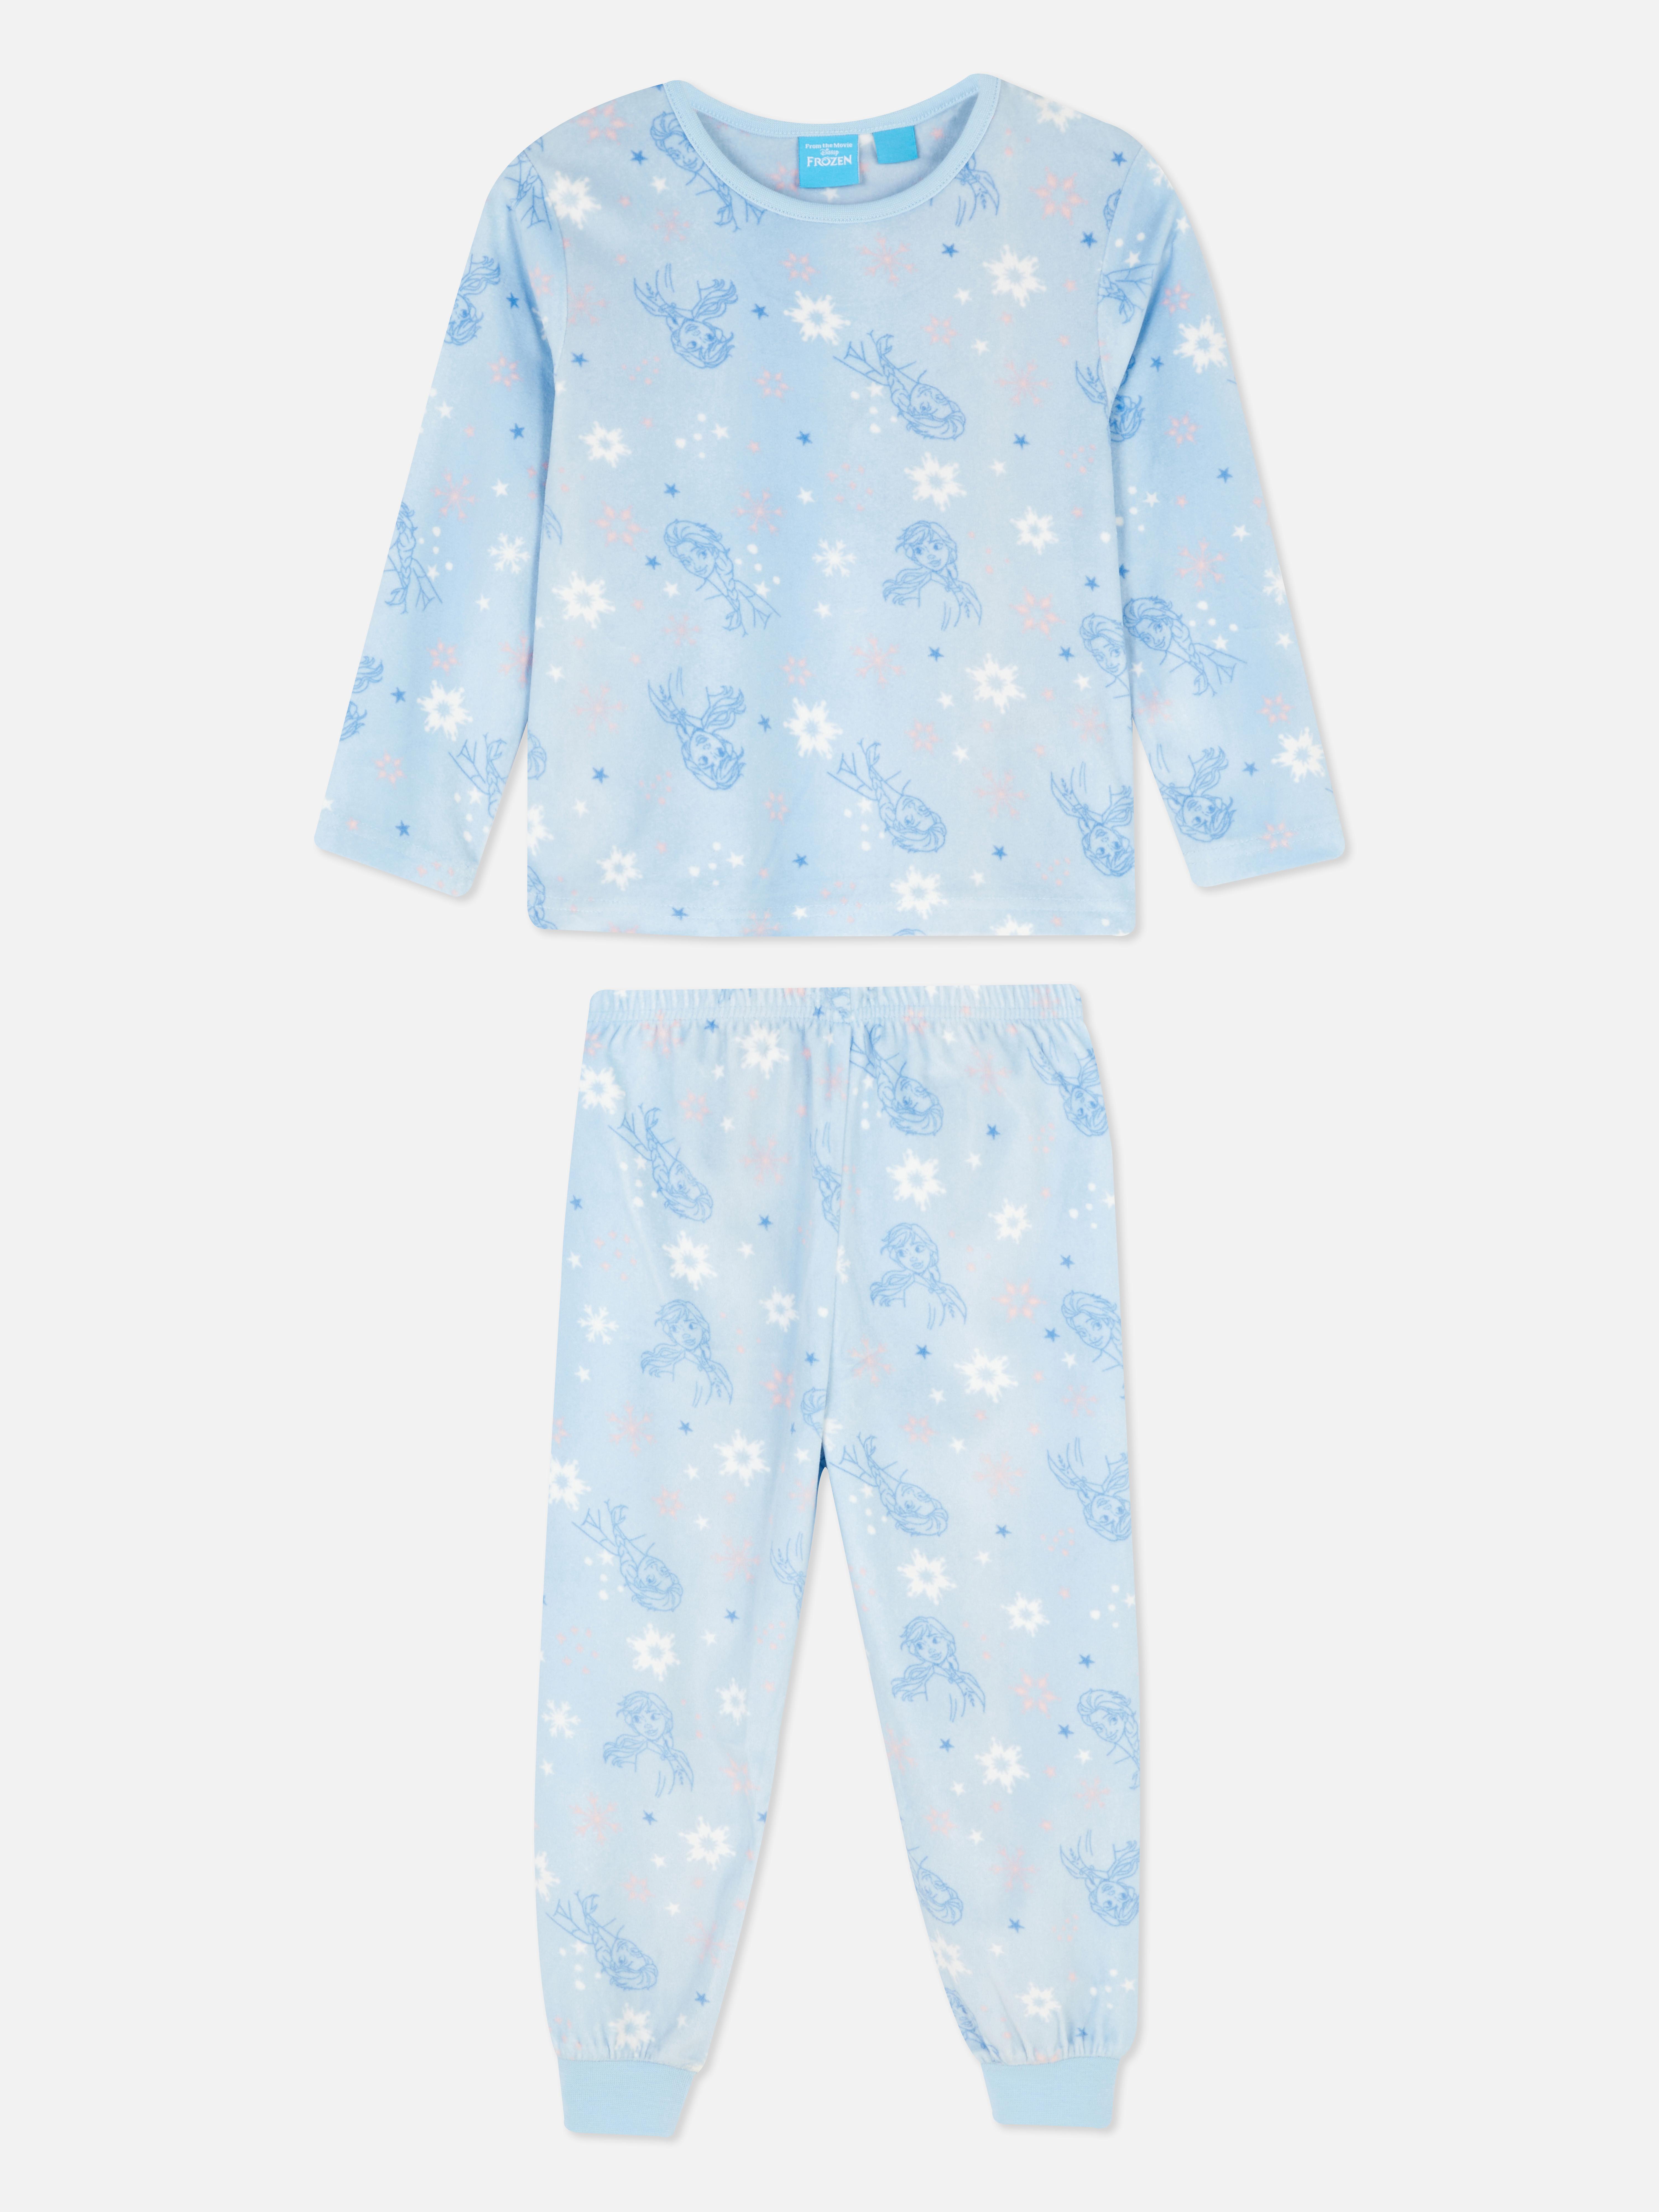 Disney’s Frozen Minky Pyjamas